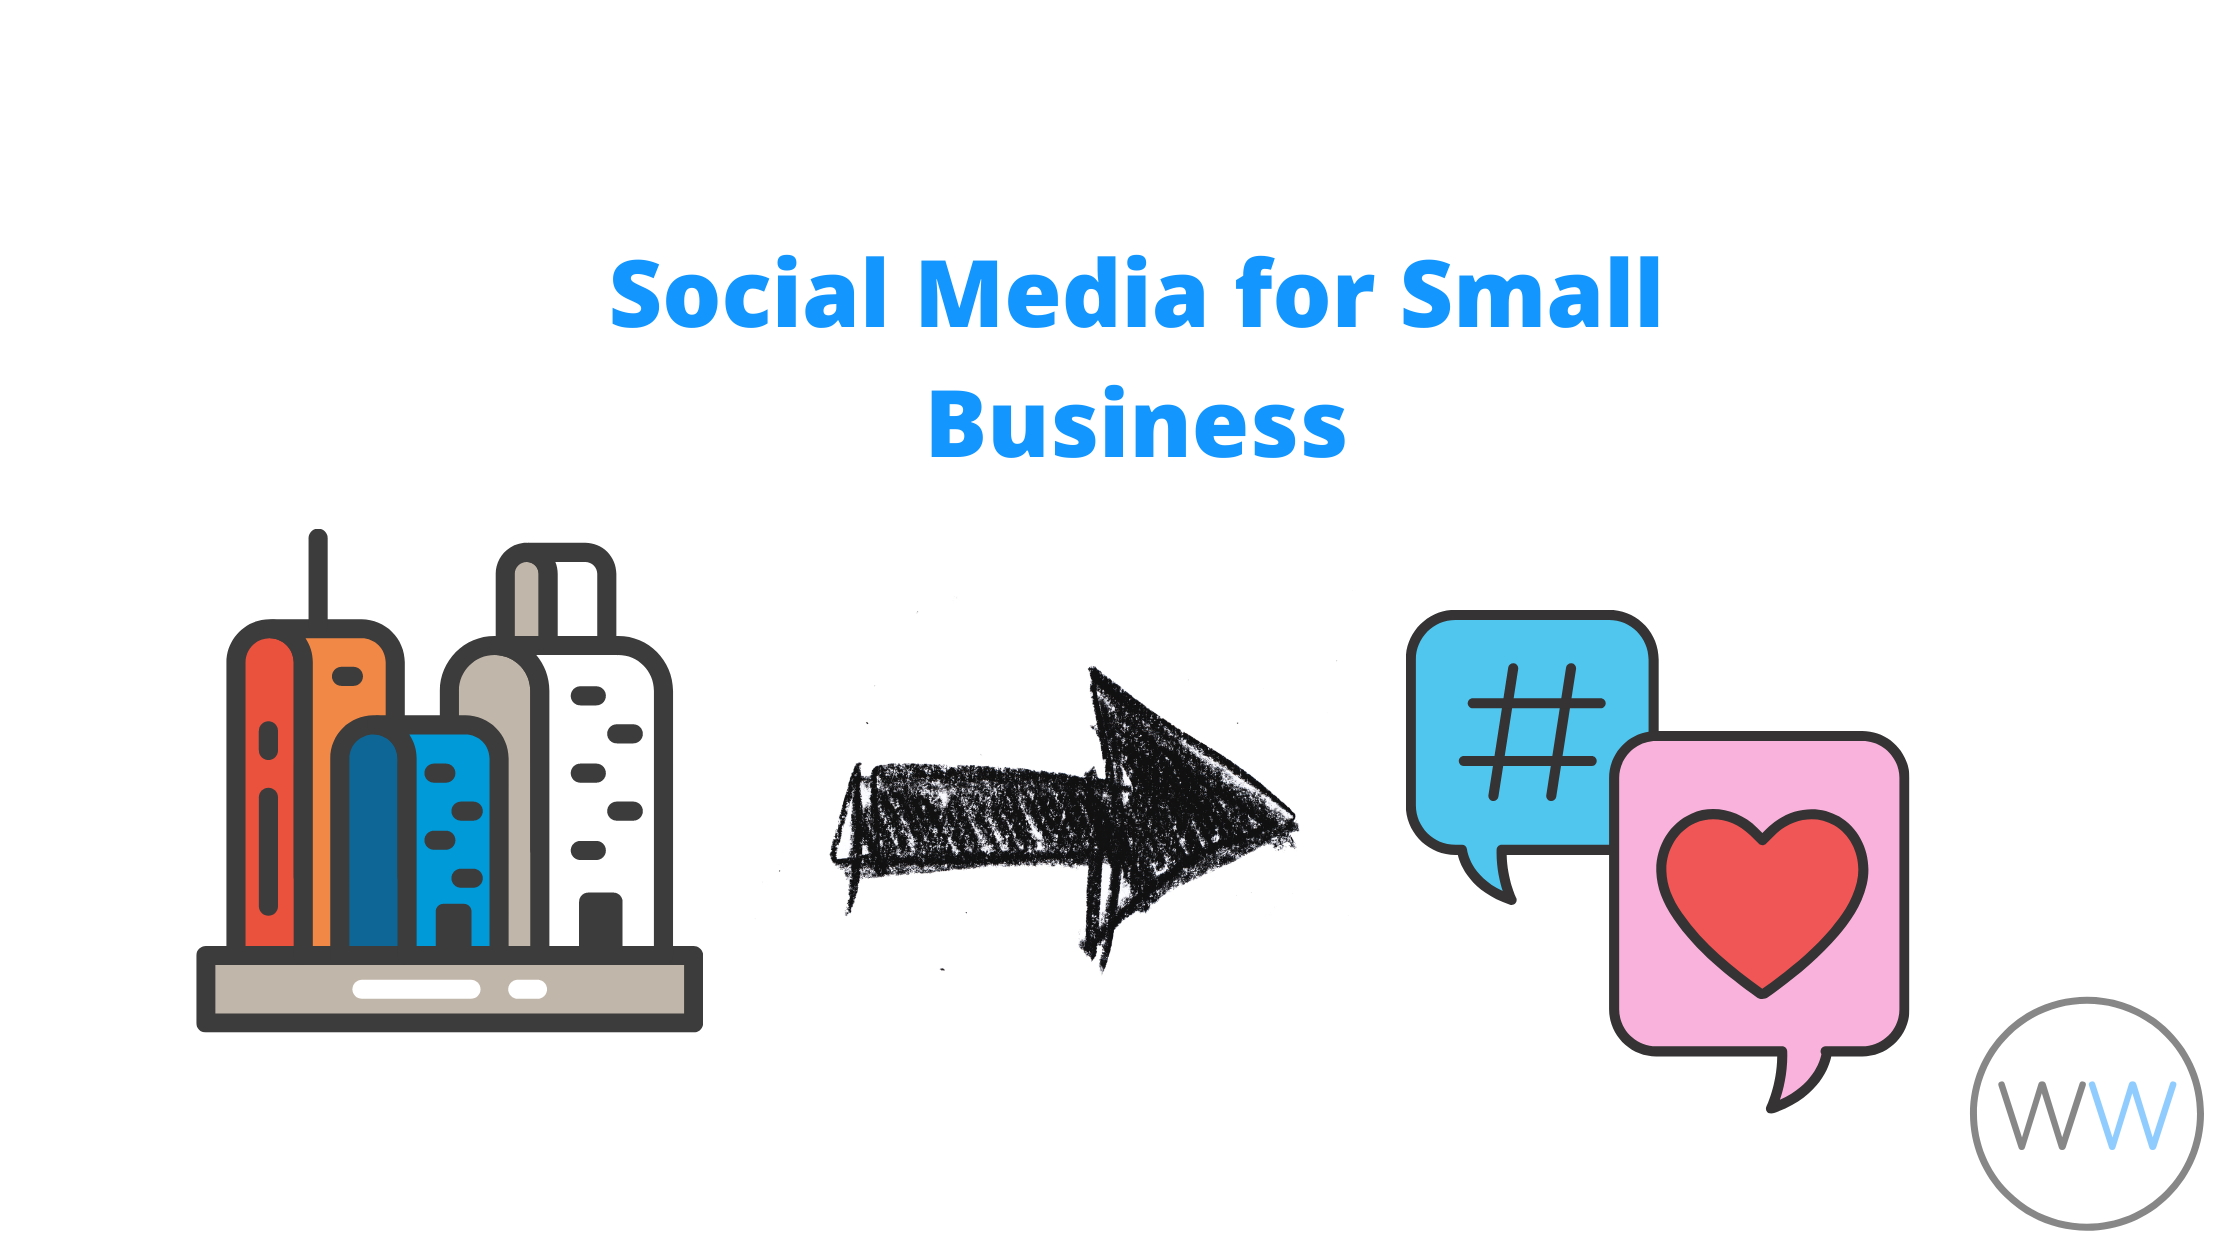 marketing small business on social media